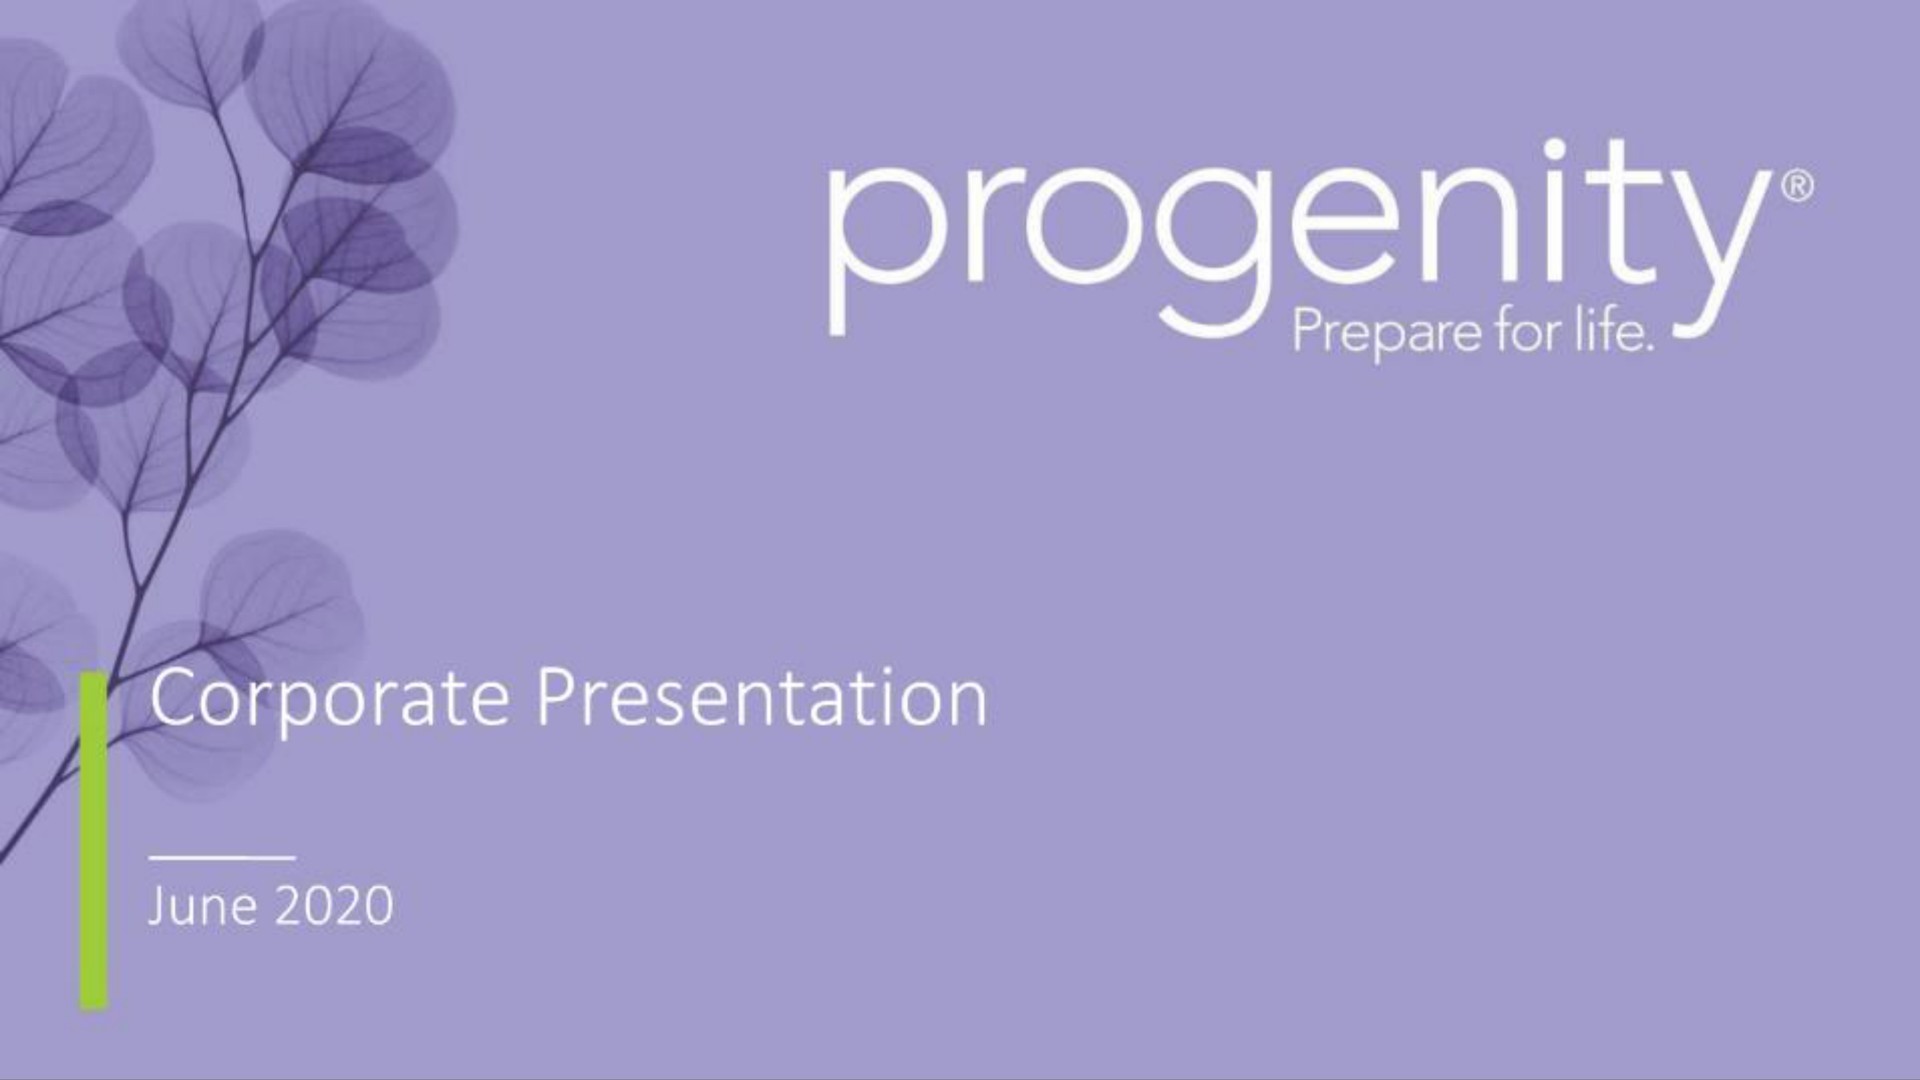 progenity prepare for life corporate presentation | Progenity